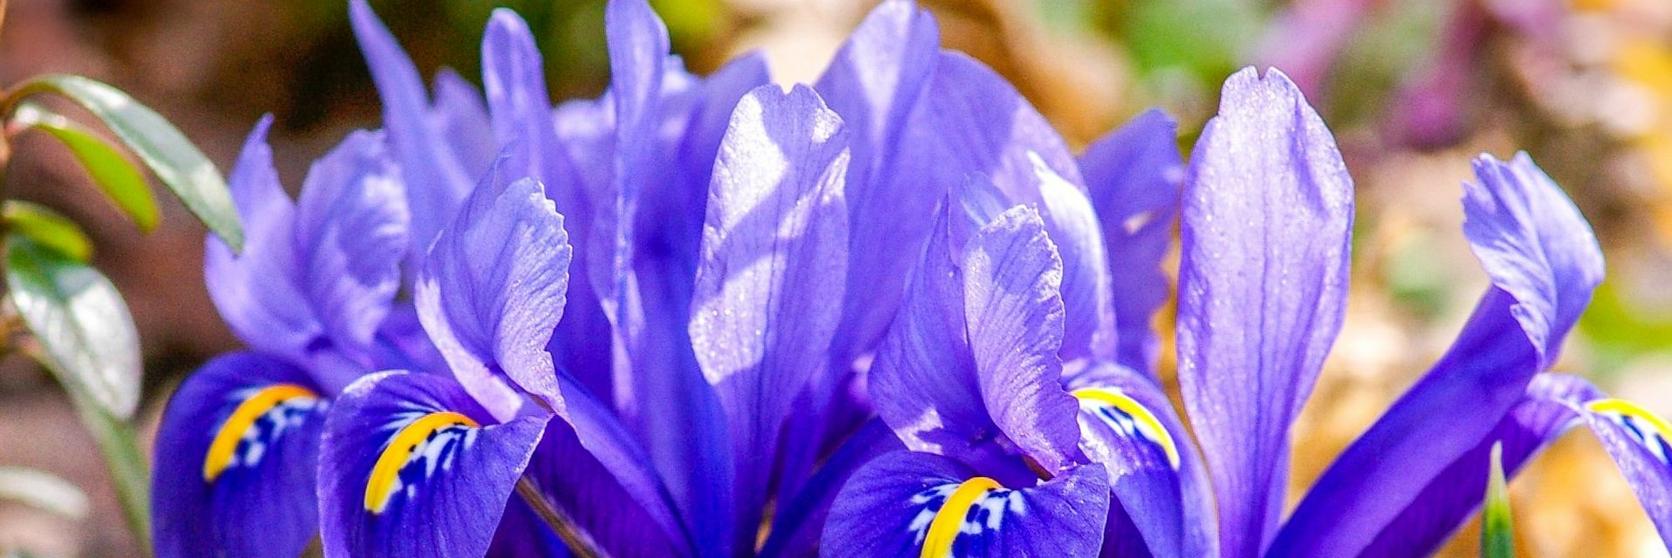 crested-irises-blue